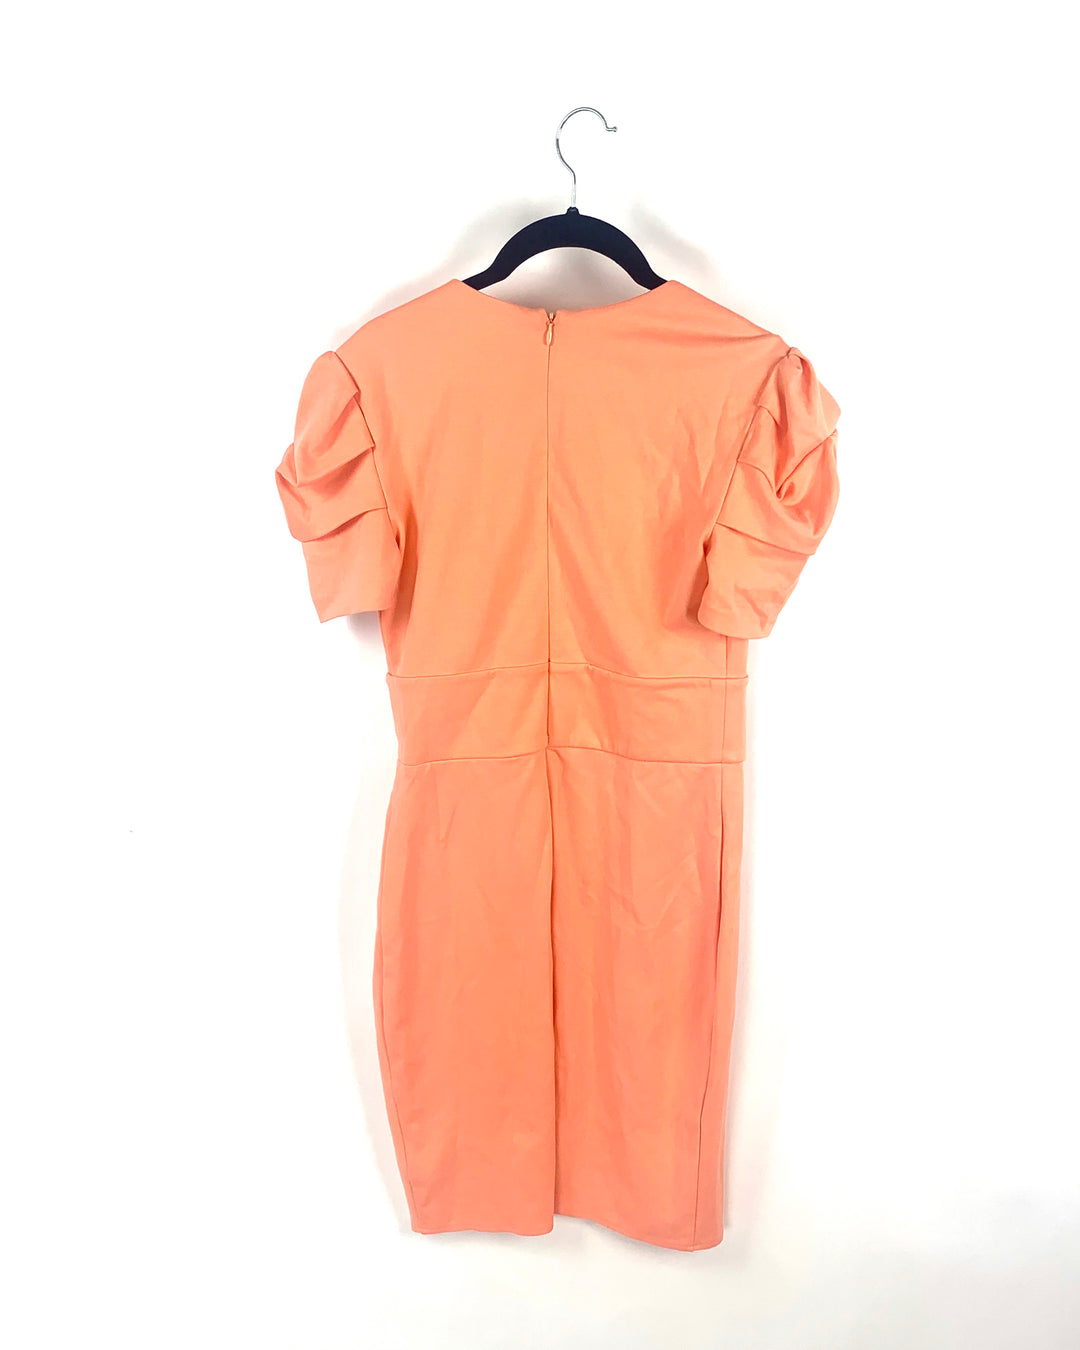 Peach V-Neck Dress - Small